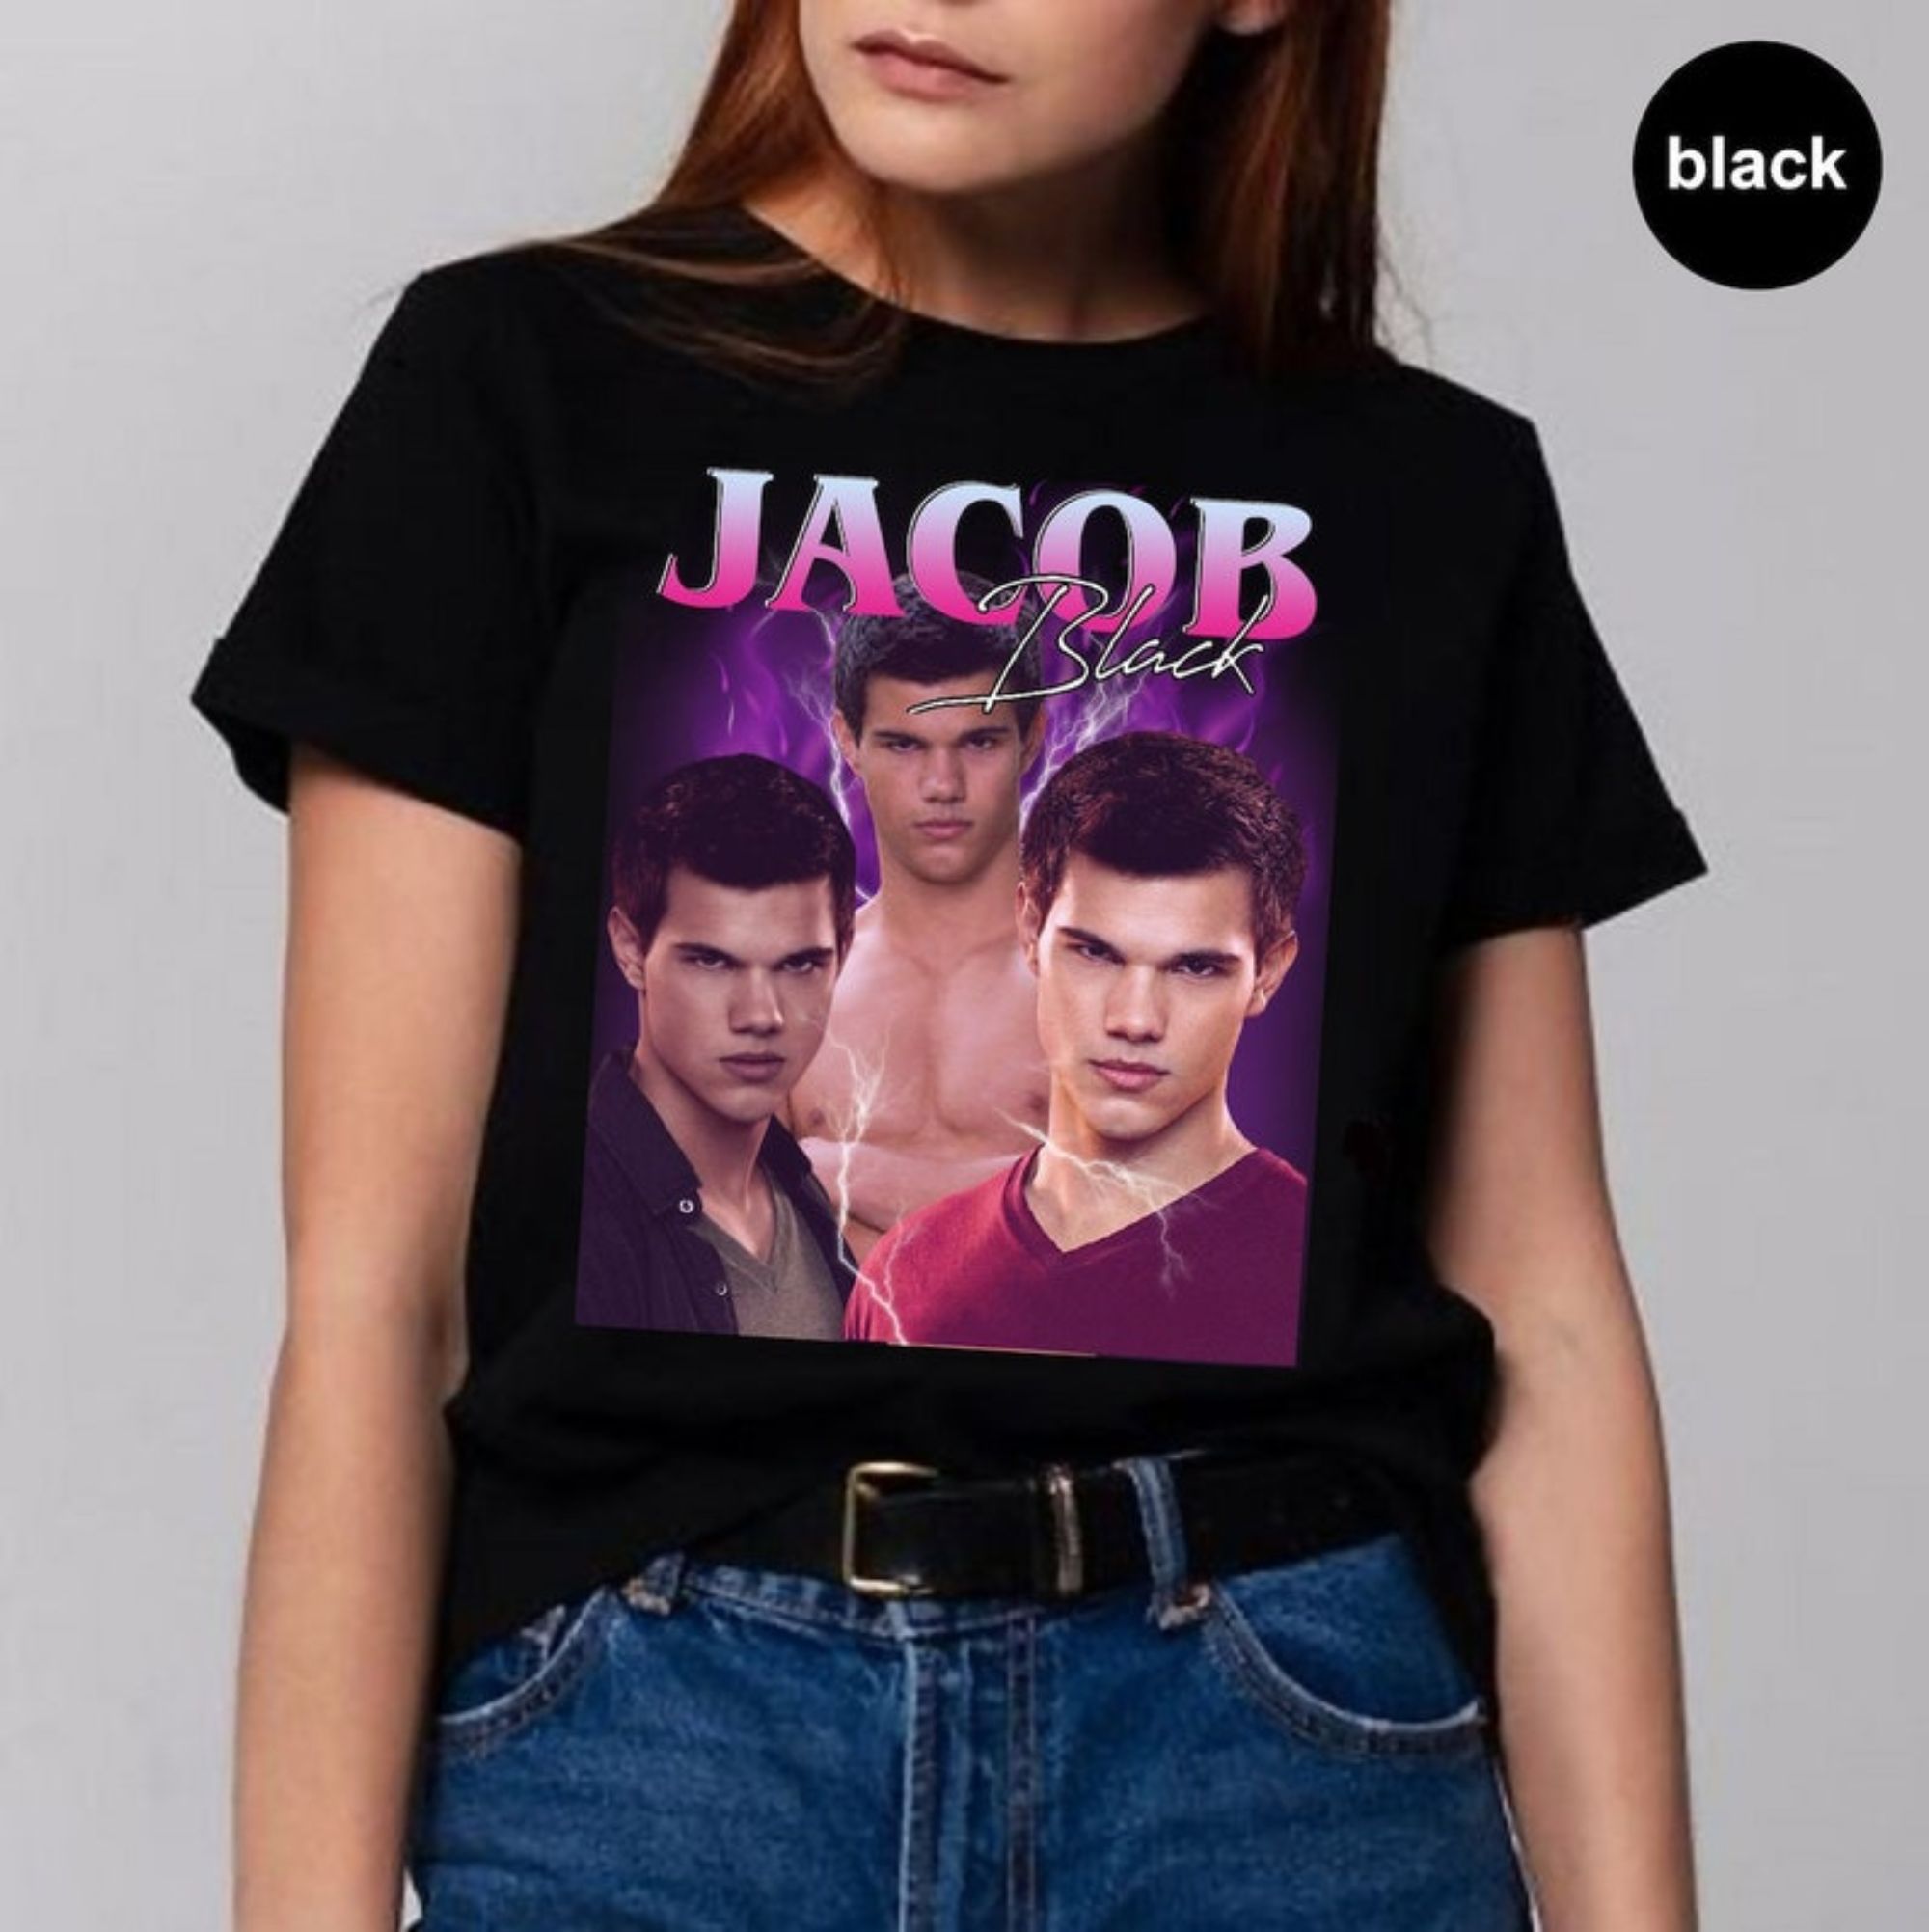 Twilight t-shirt team jacob